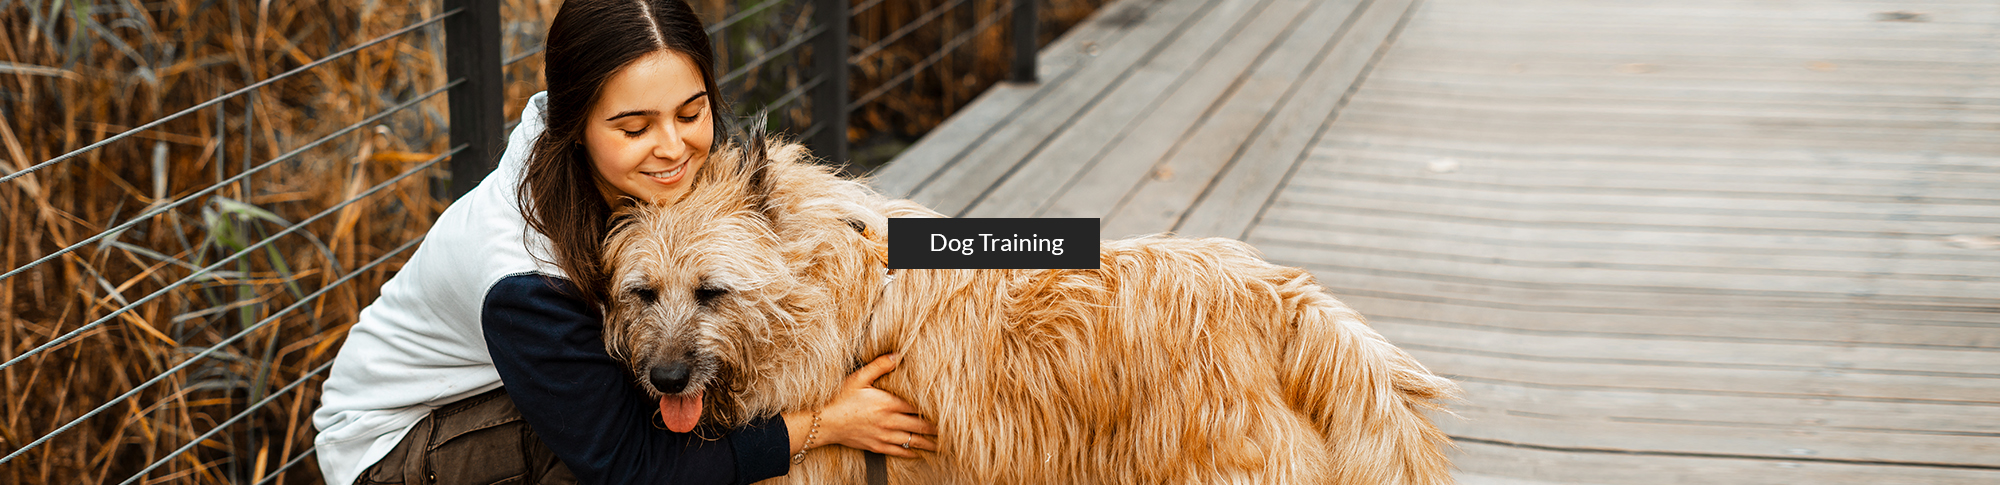 Dog Training - Sit n' Stay Professional Dog Training